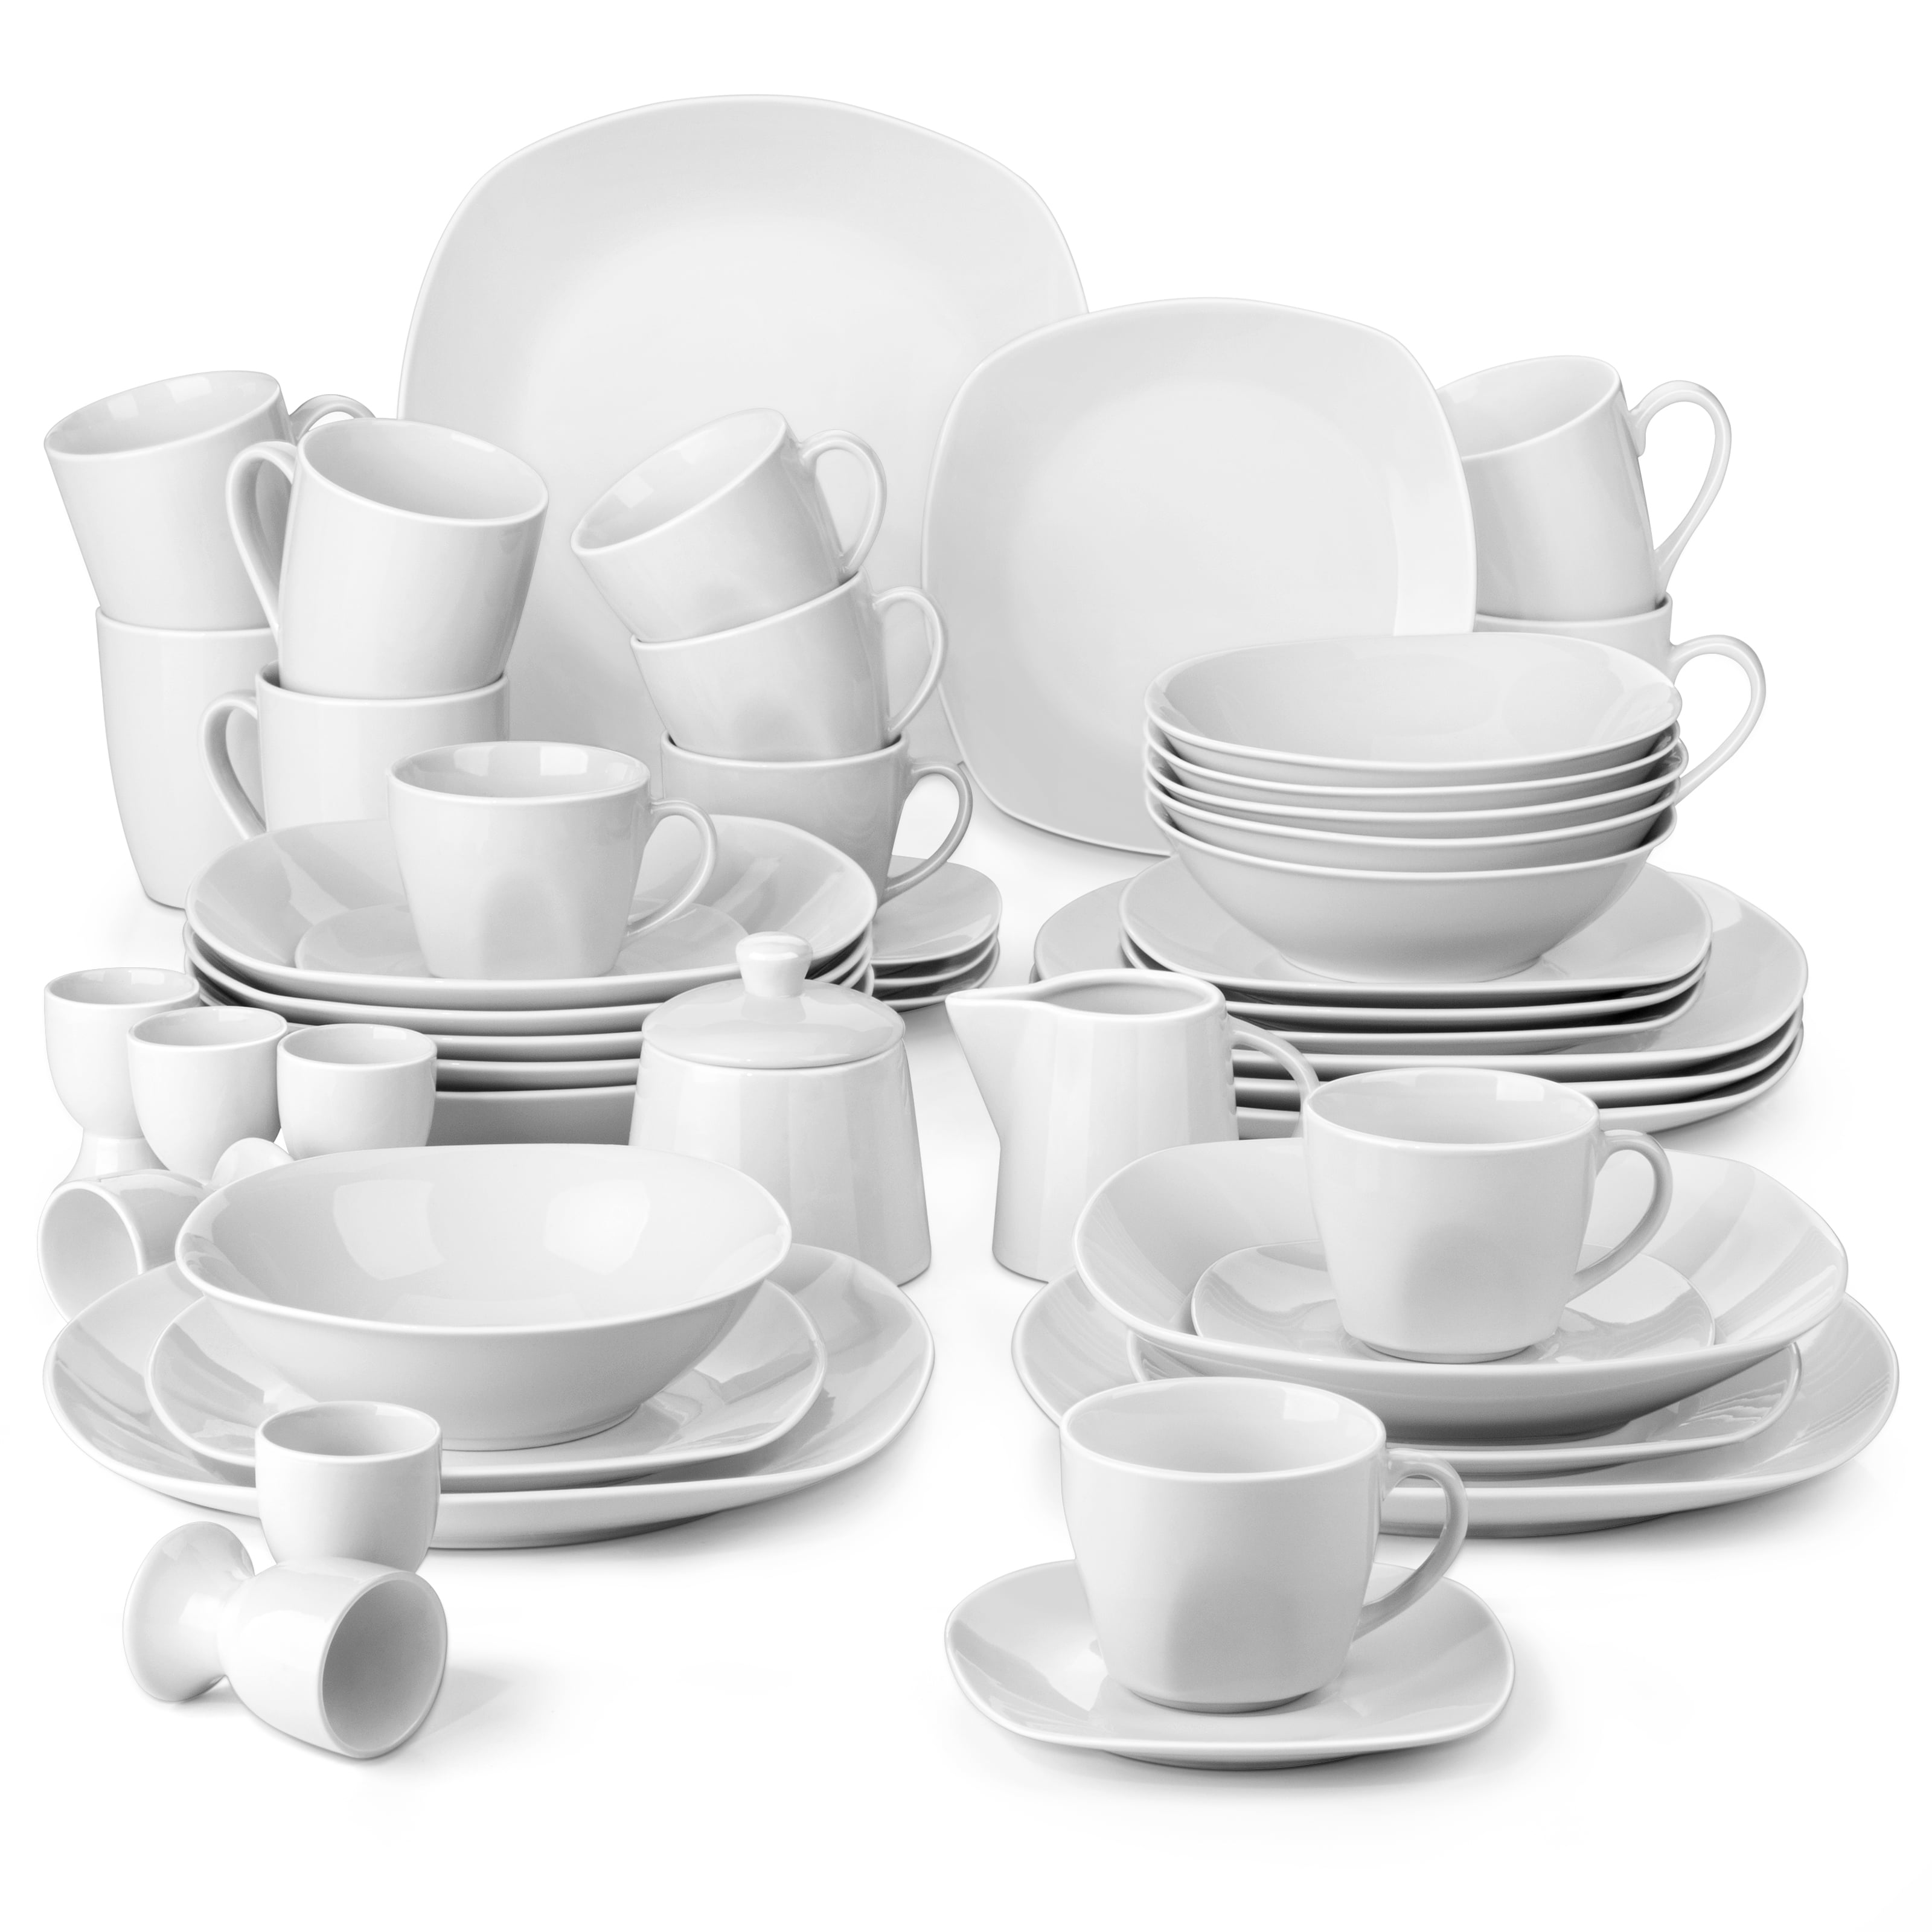 Details about   MALACASA Elisa 50-Pieces Dinnerware Set Porcelain Dinner Kitchen Dishes for 6 